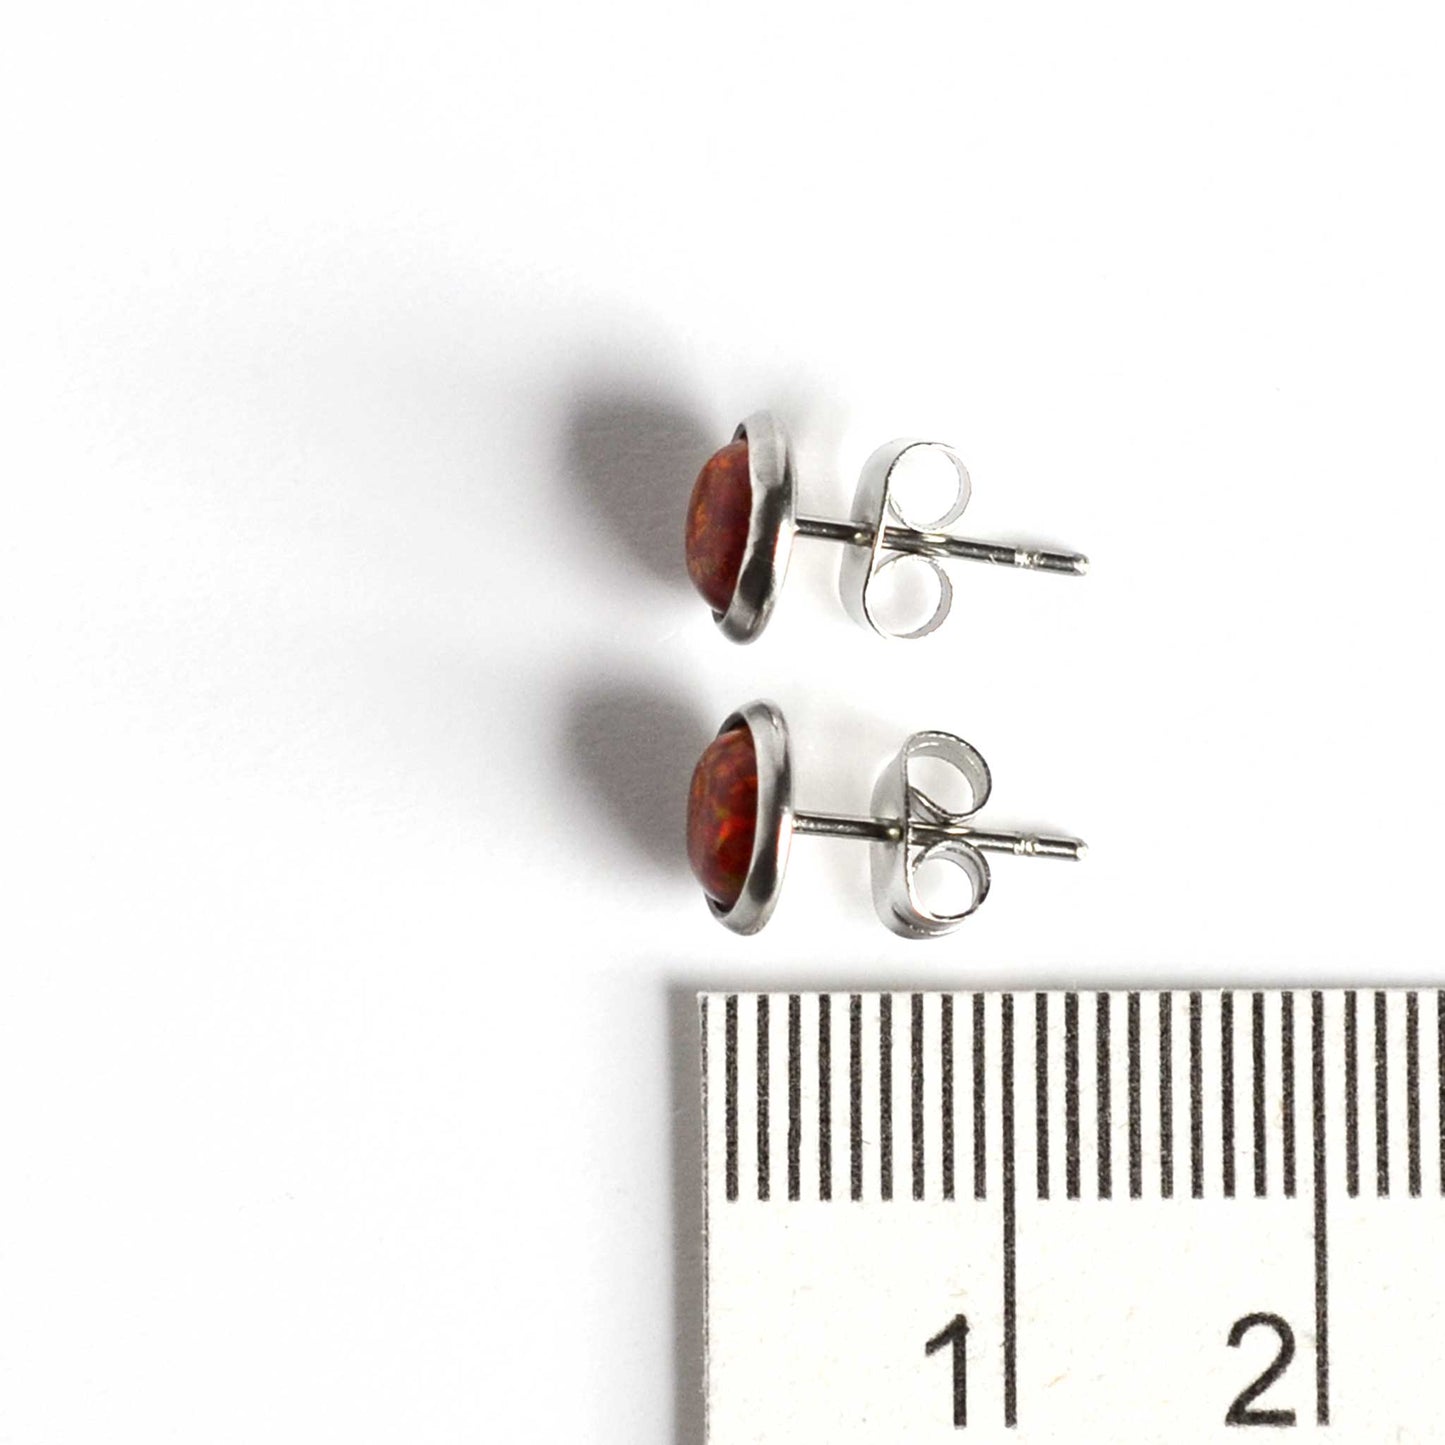 Red Opal stud earrings next to ruler